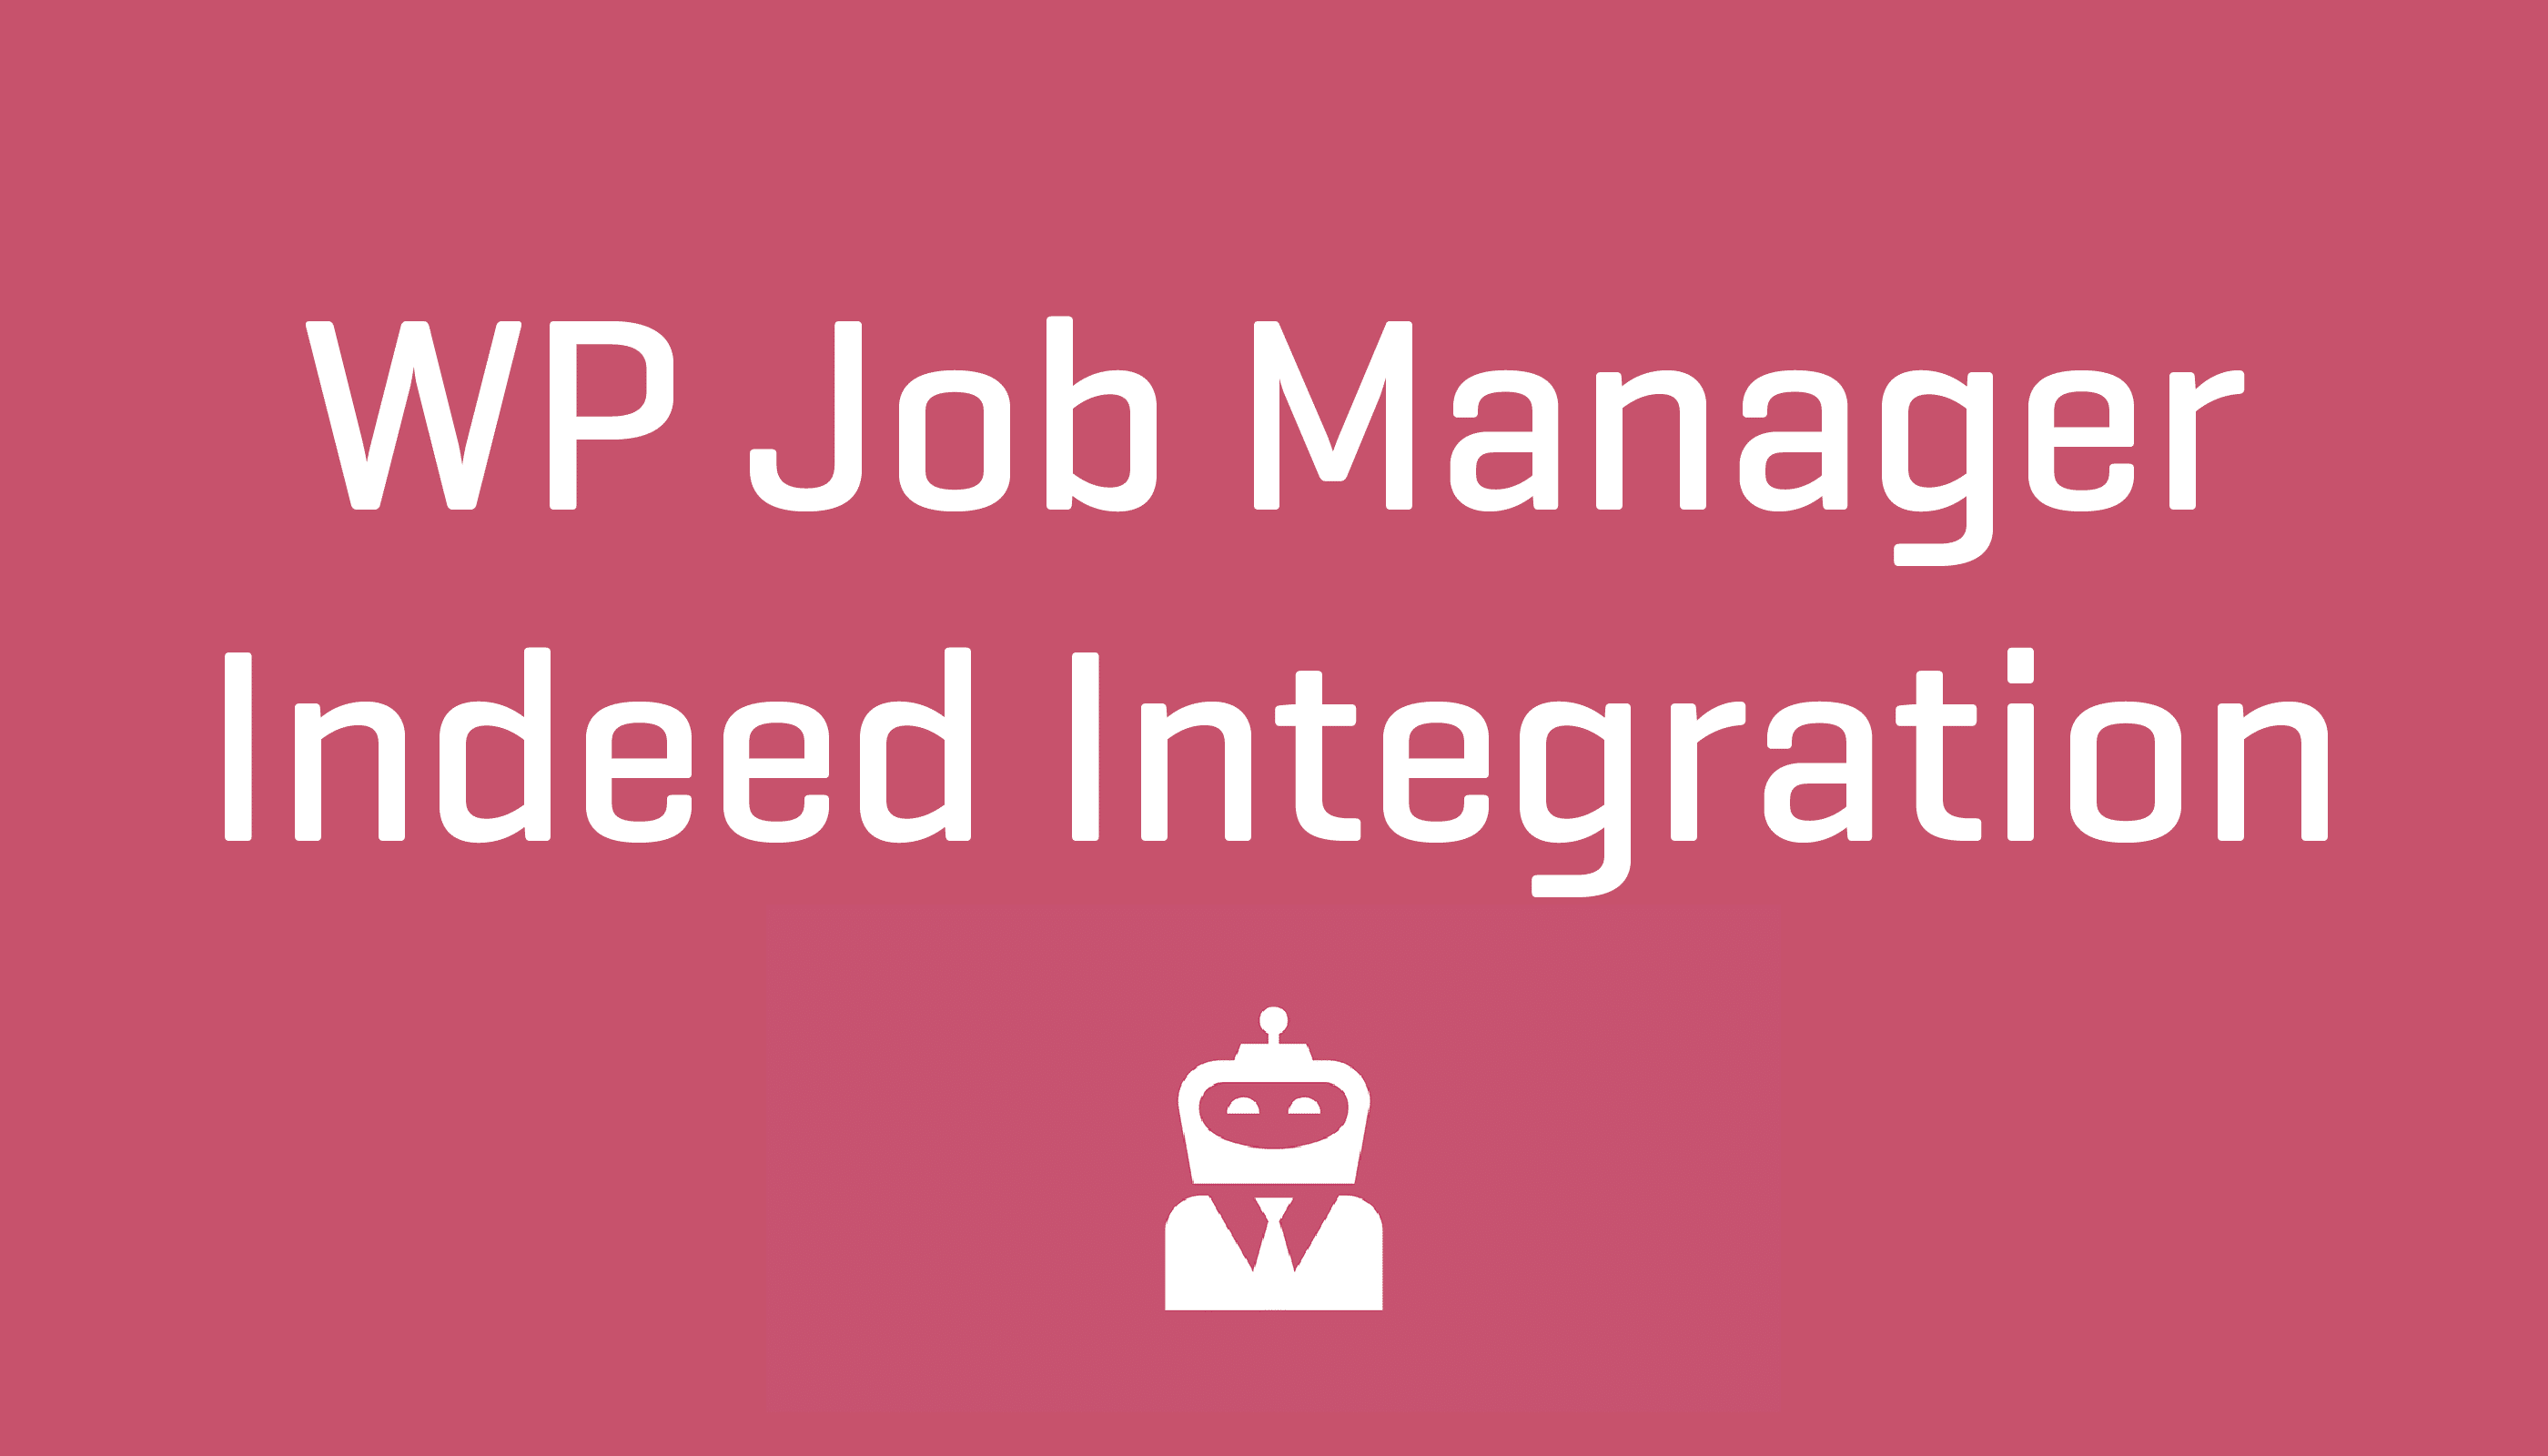 Wordpress WP Job Manager Indeed Integration